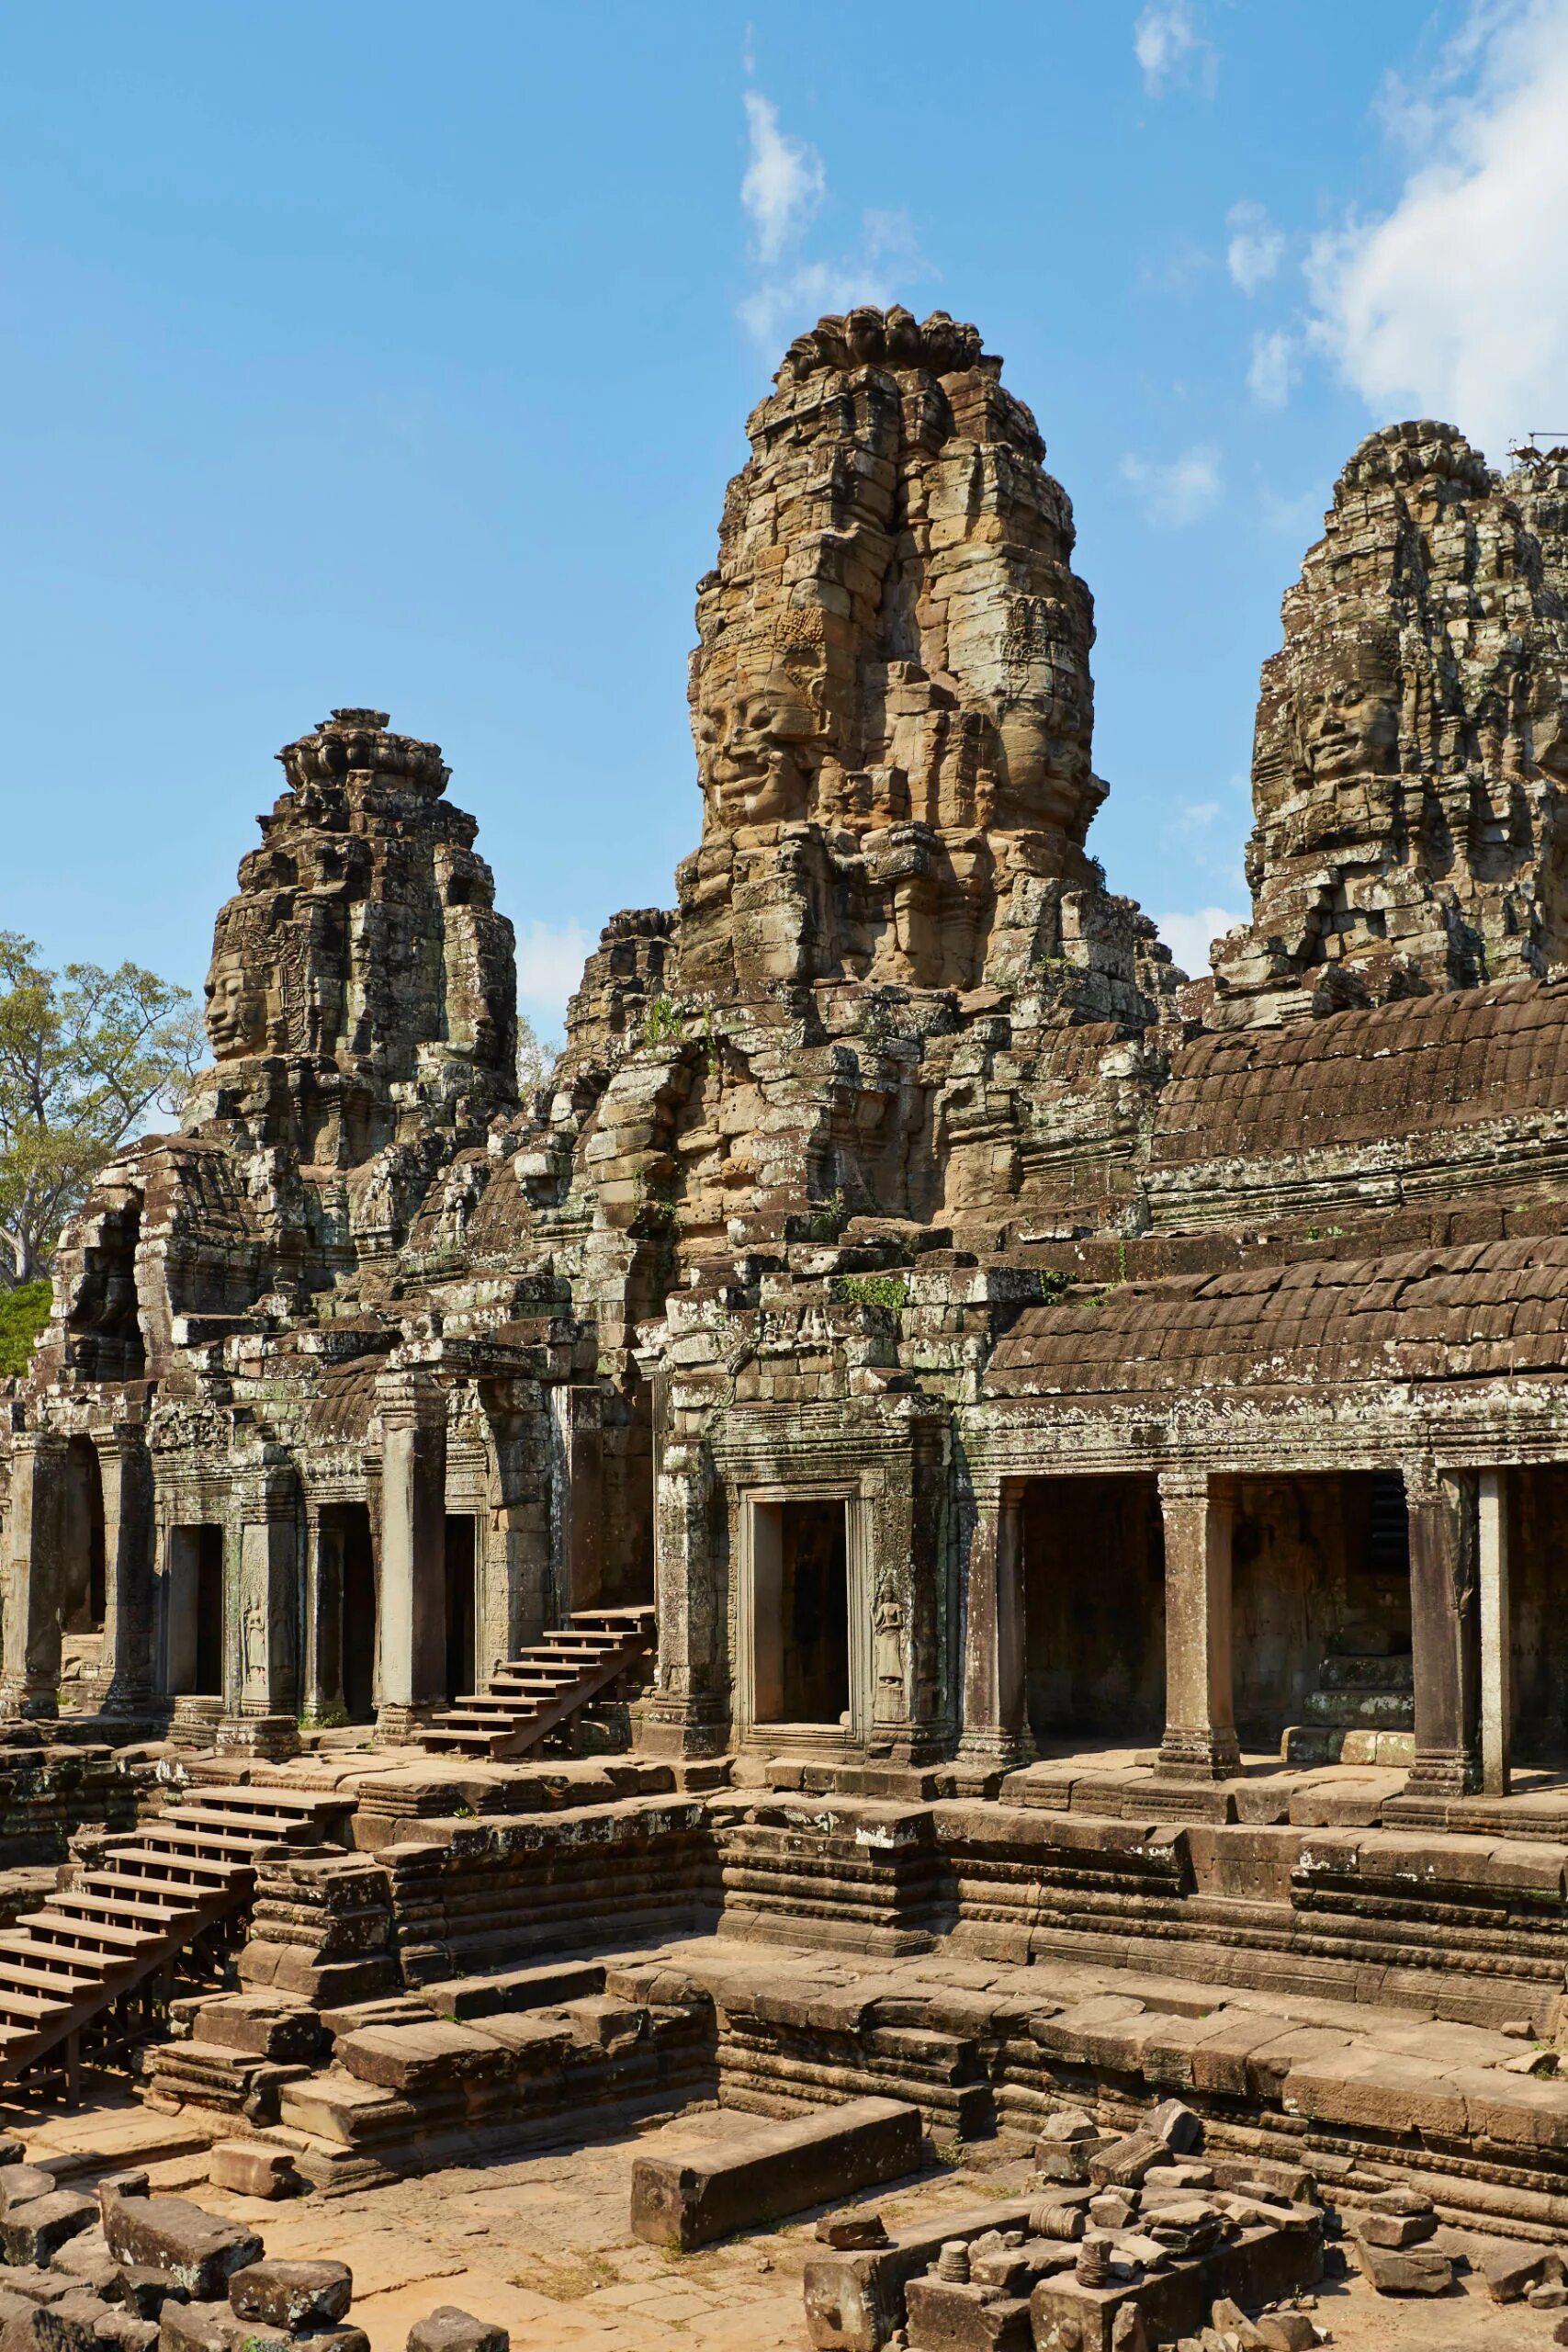 Камбоджа храм Ангкор. Храм Байон в Камбодже. Город Ангкор Камбоджа храм Байон. Руины храмов в Камбодже.